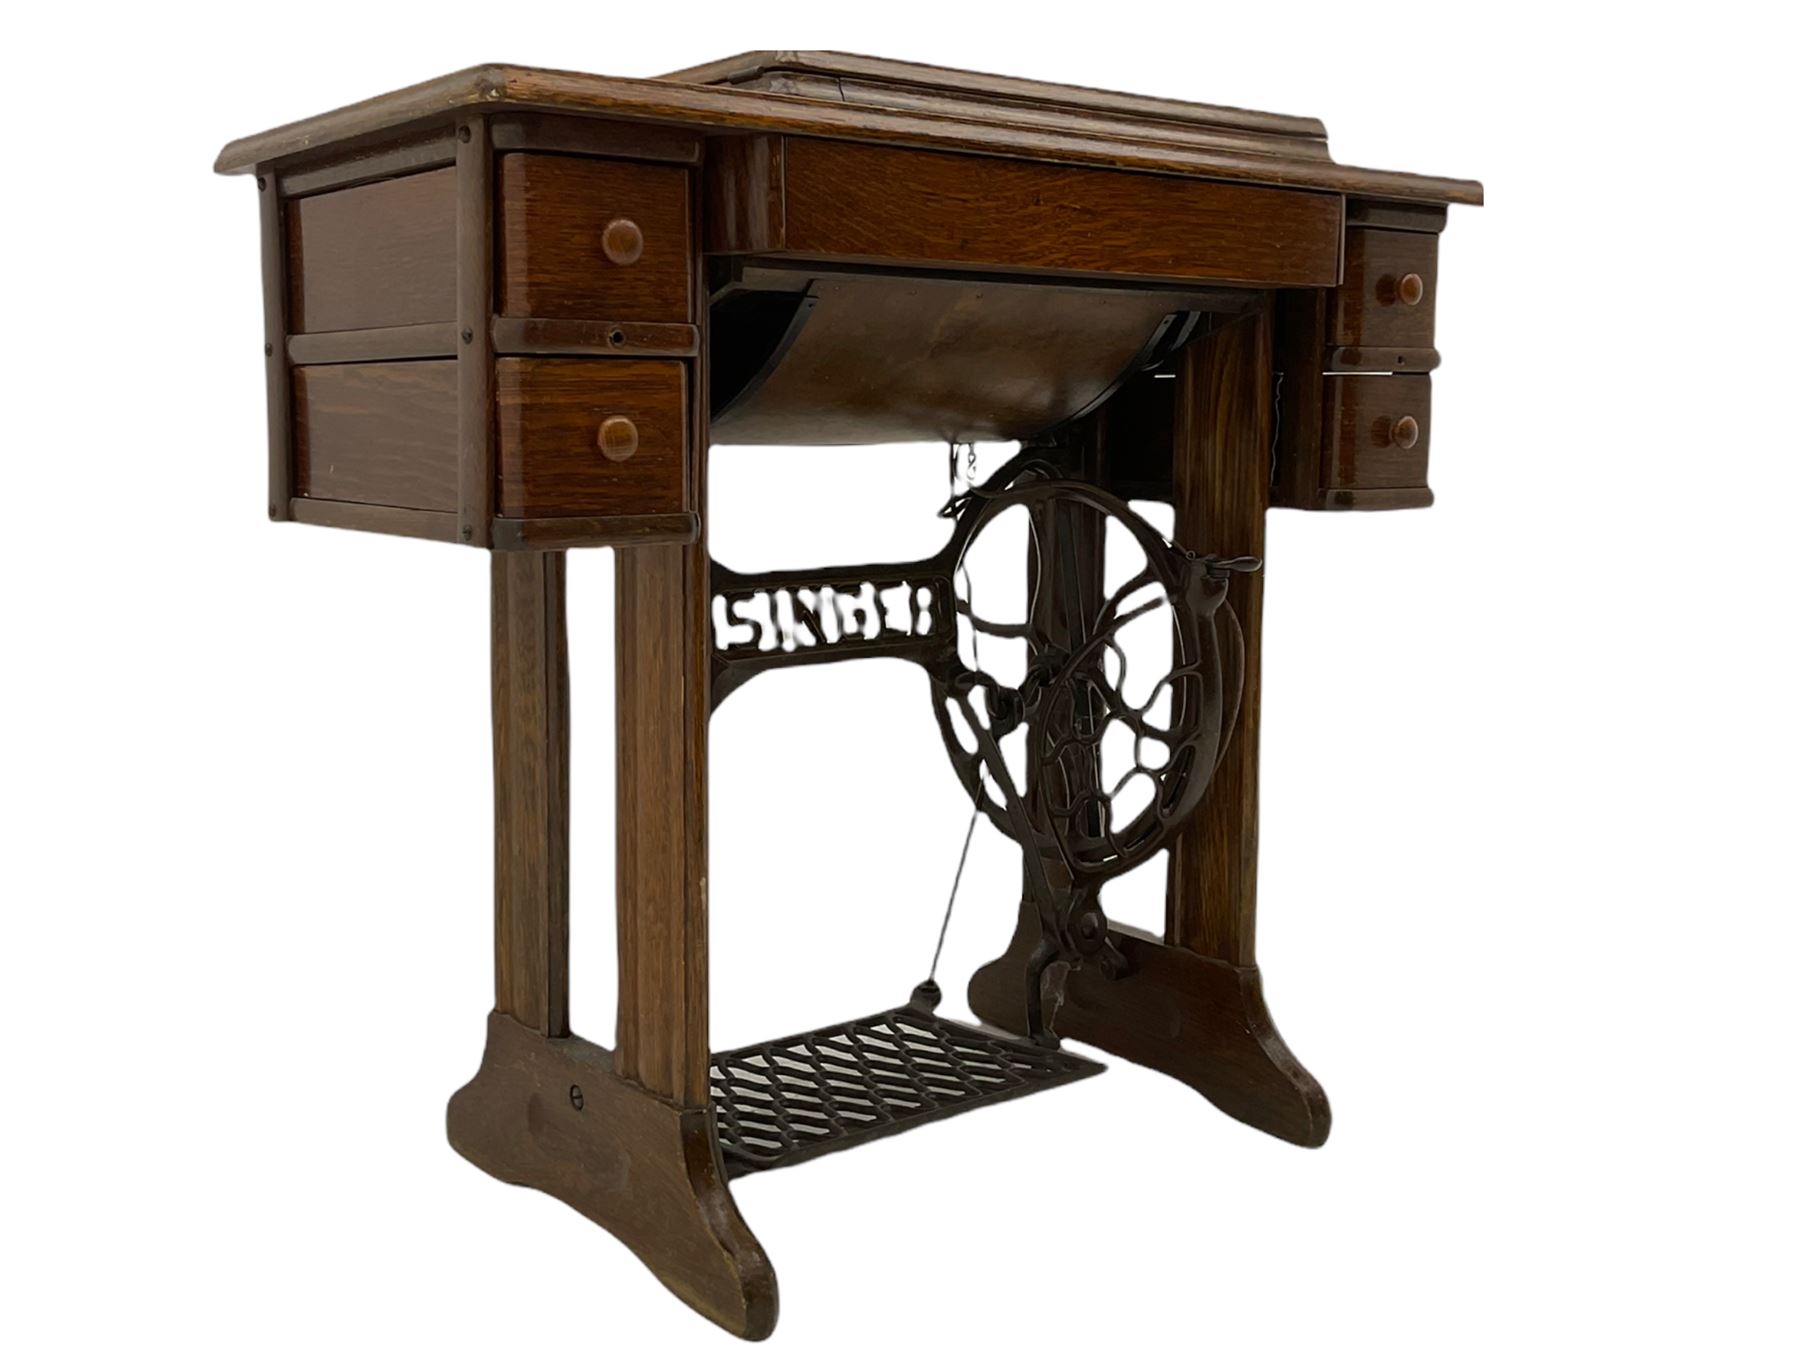 Singer treadle sewing machine - Image 9 of 12